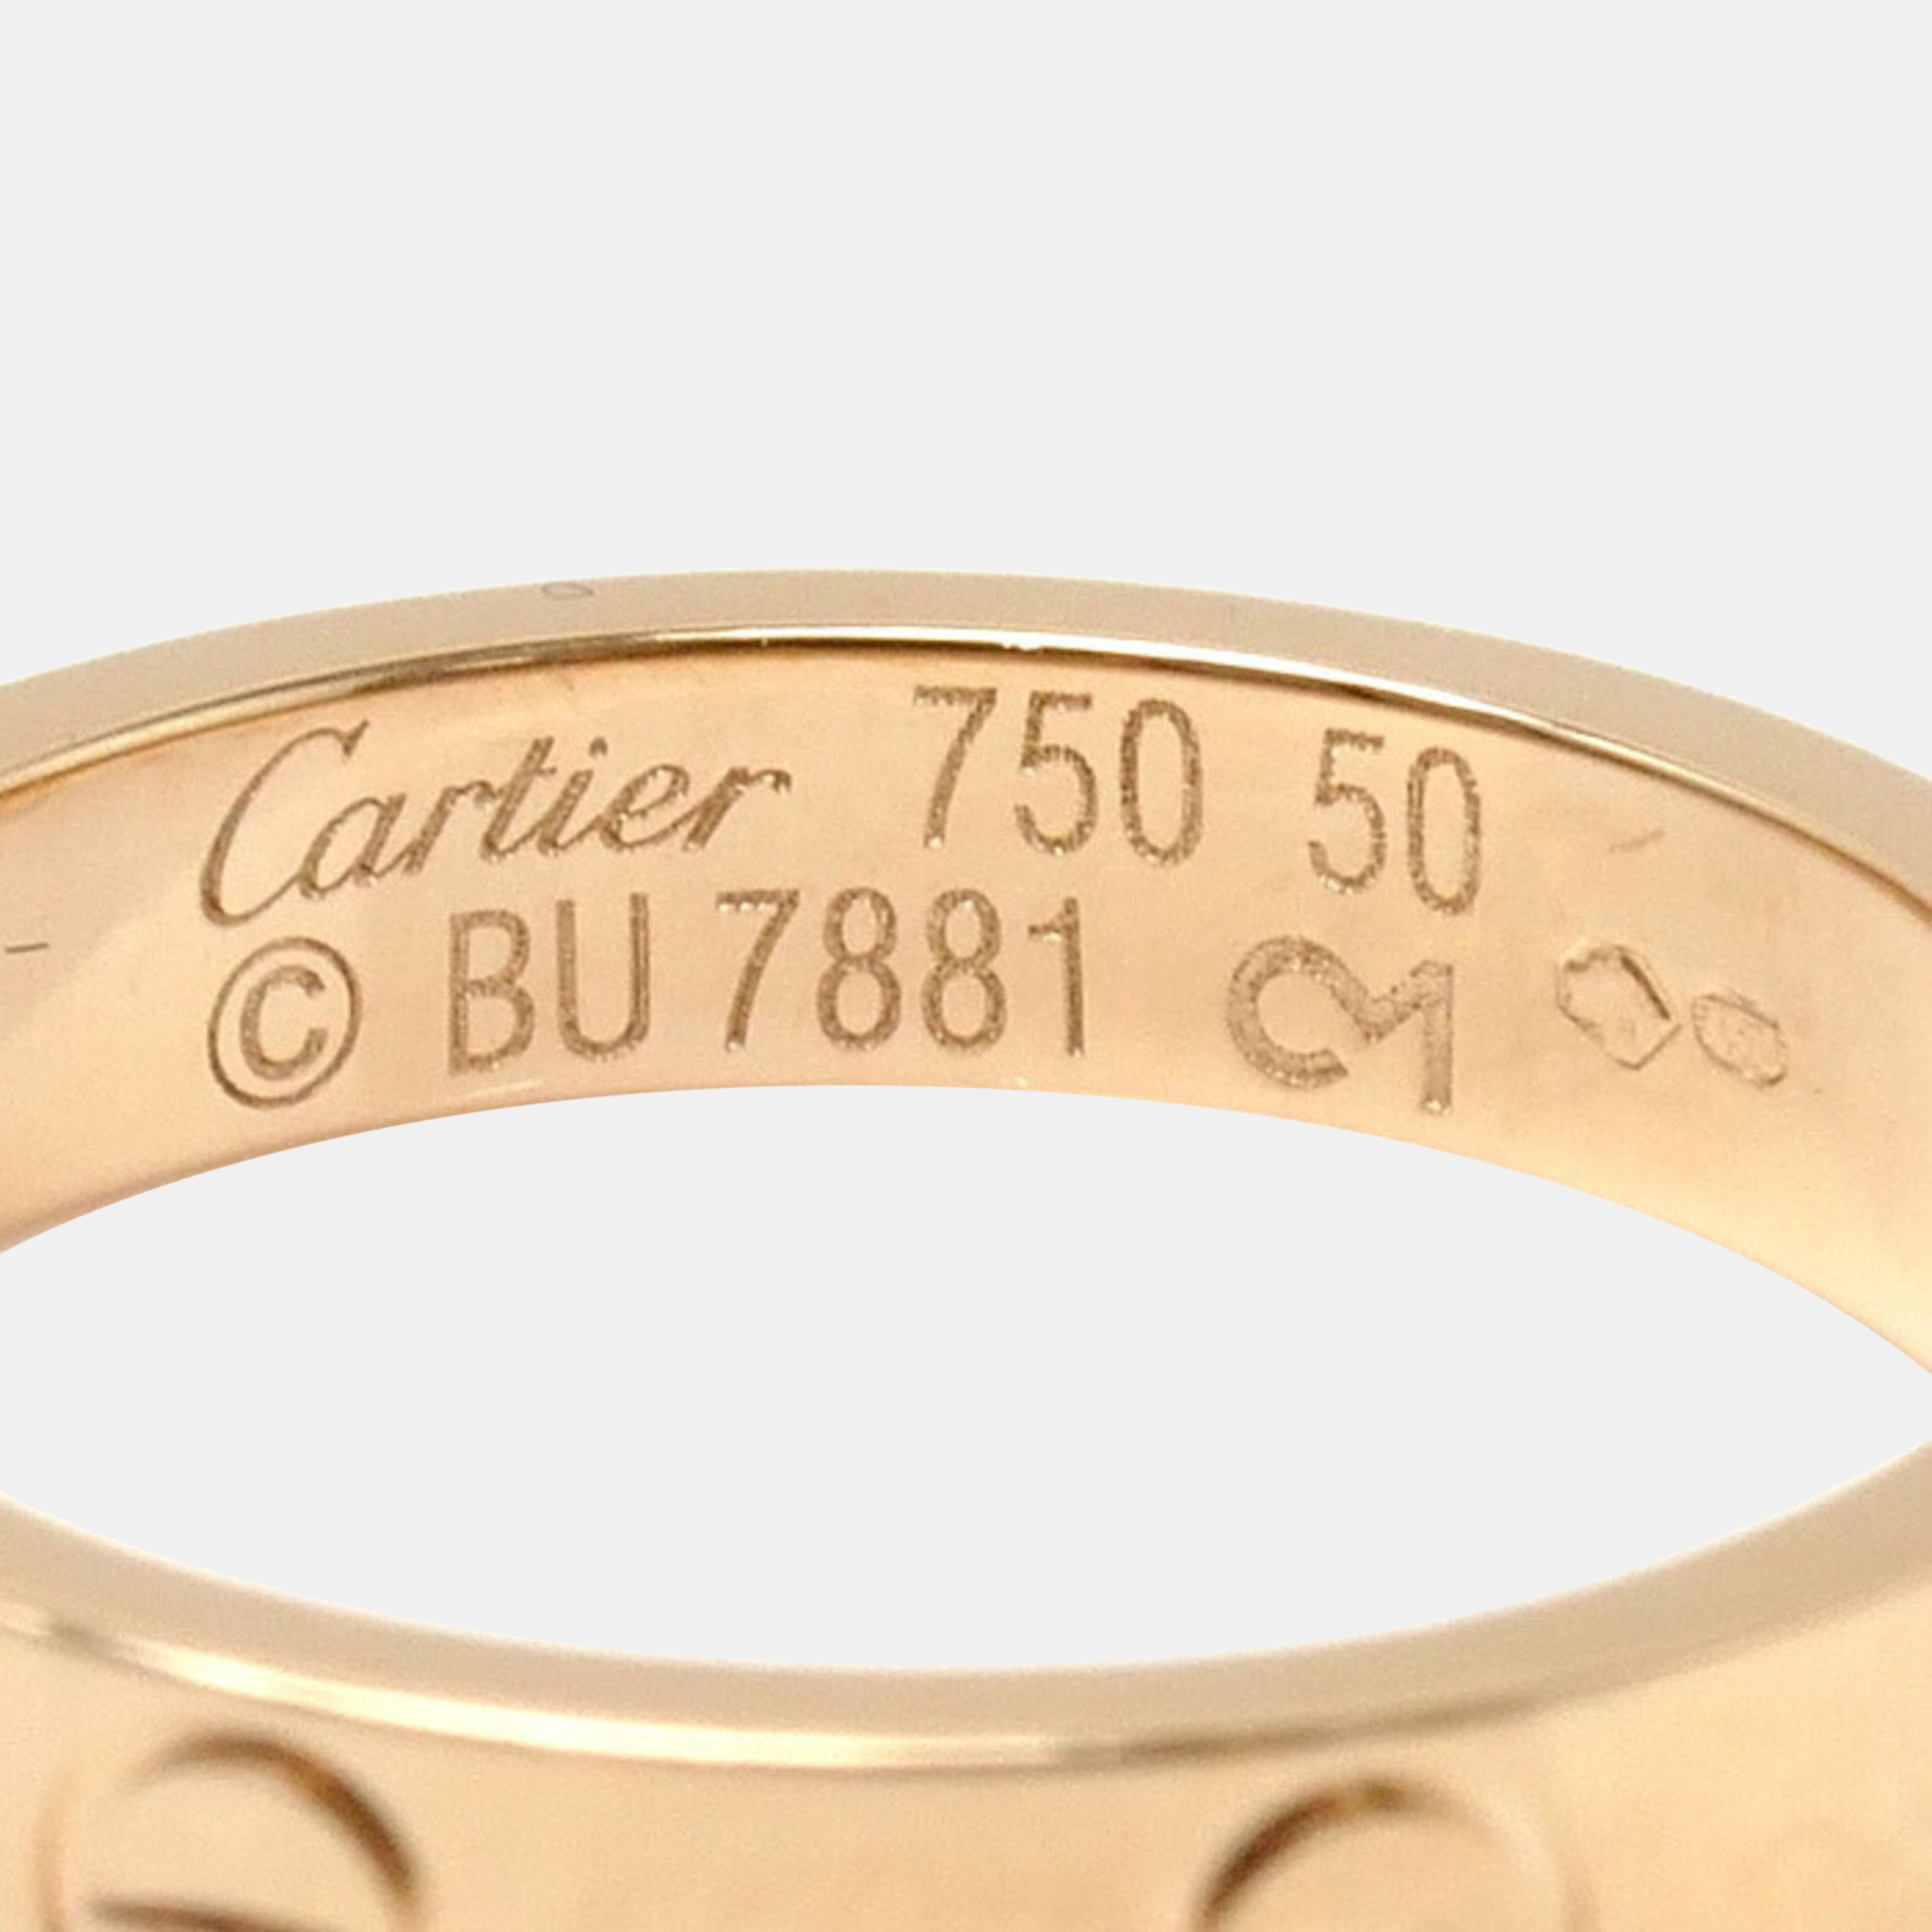 Cartier Love Rose Gold Rings EU 50